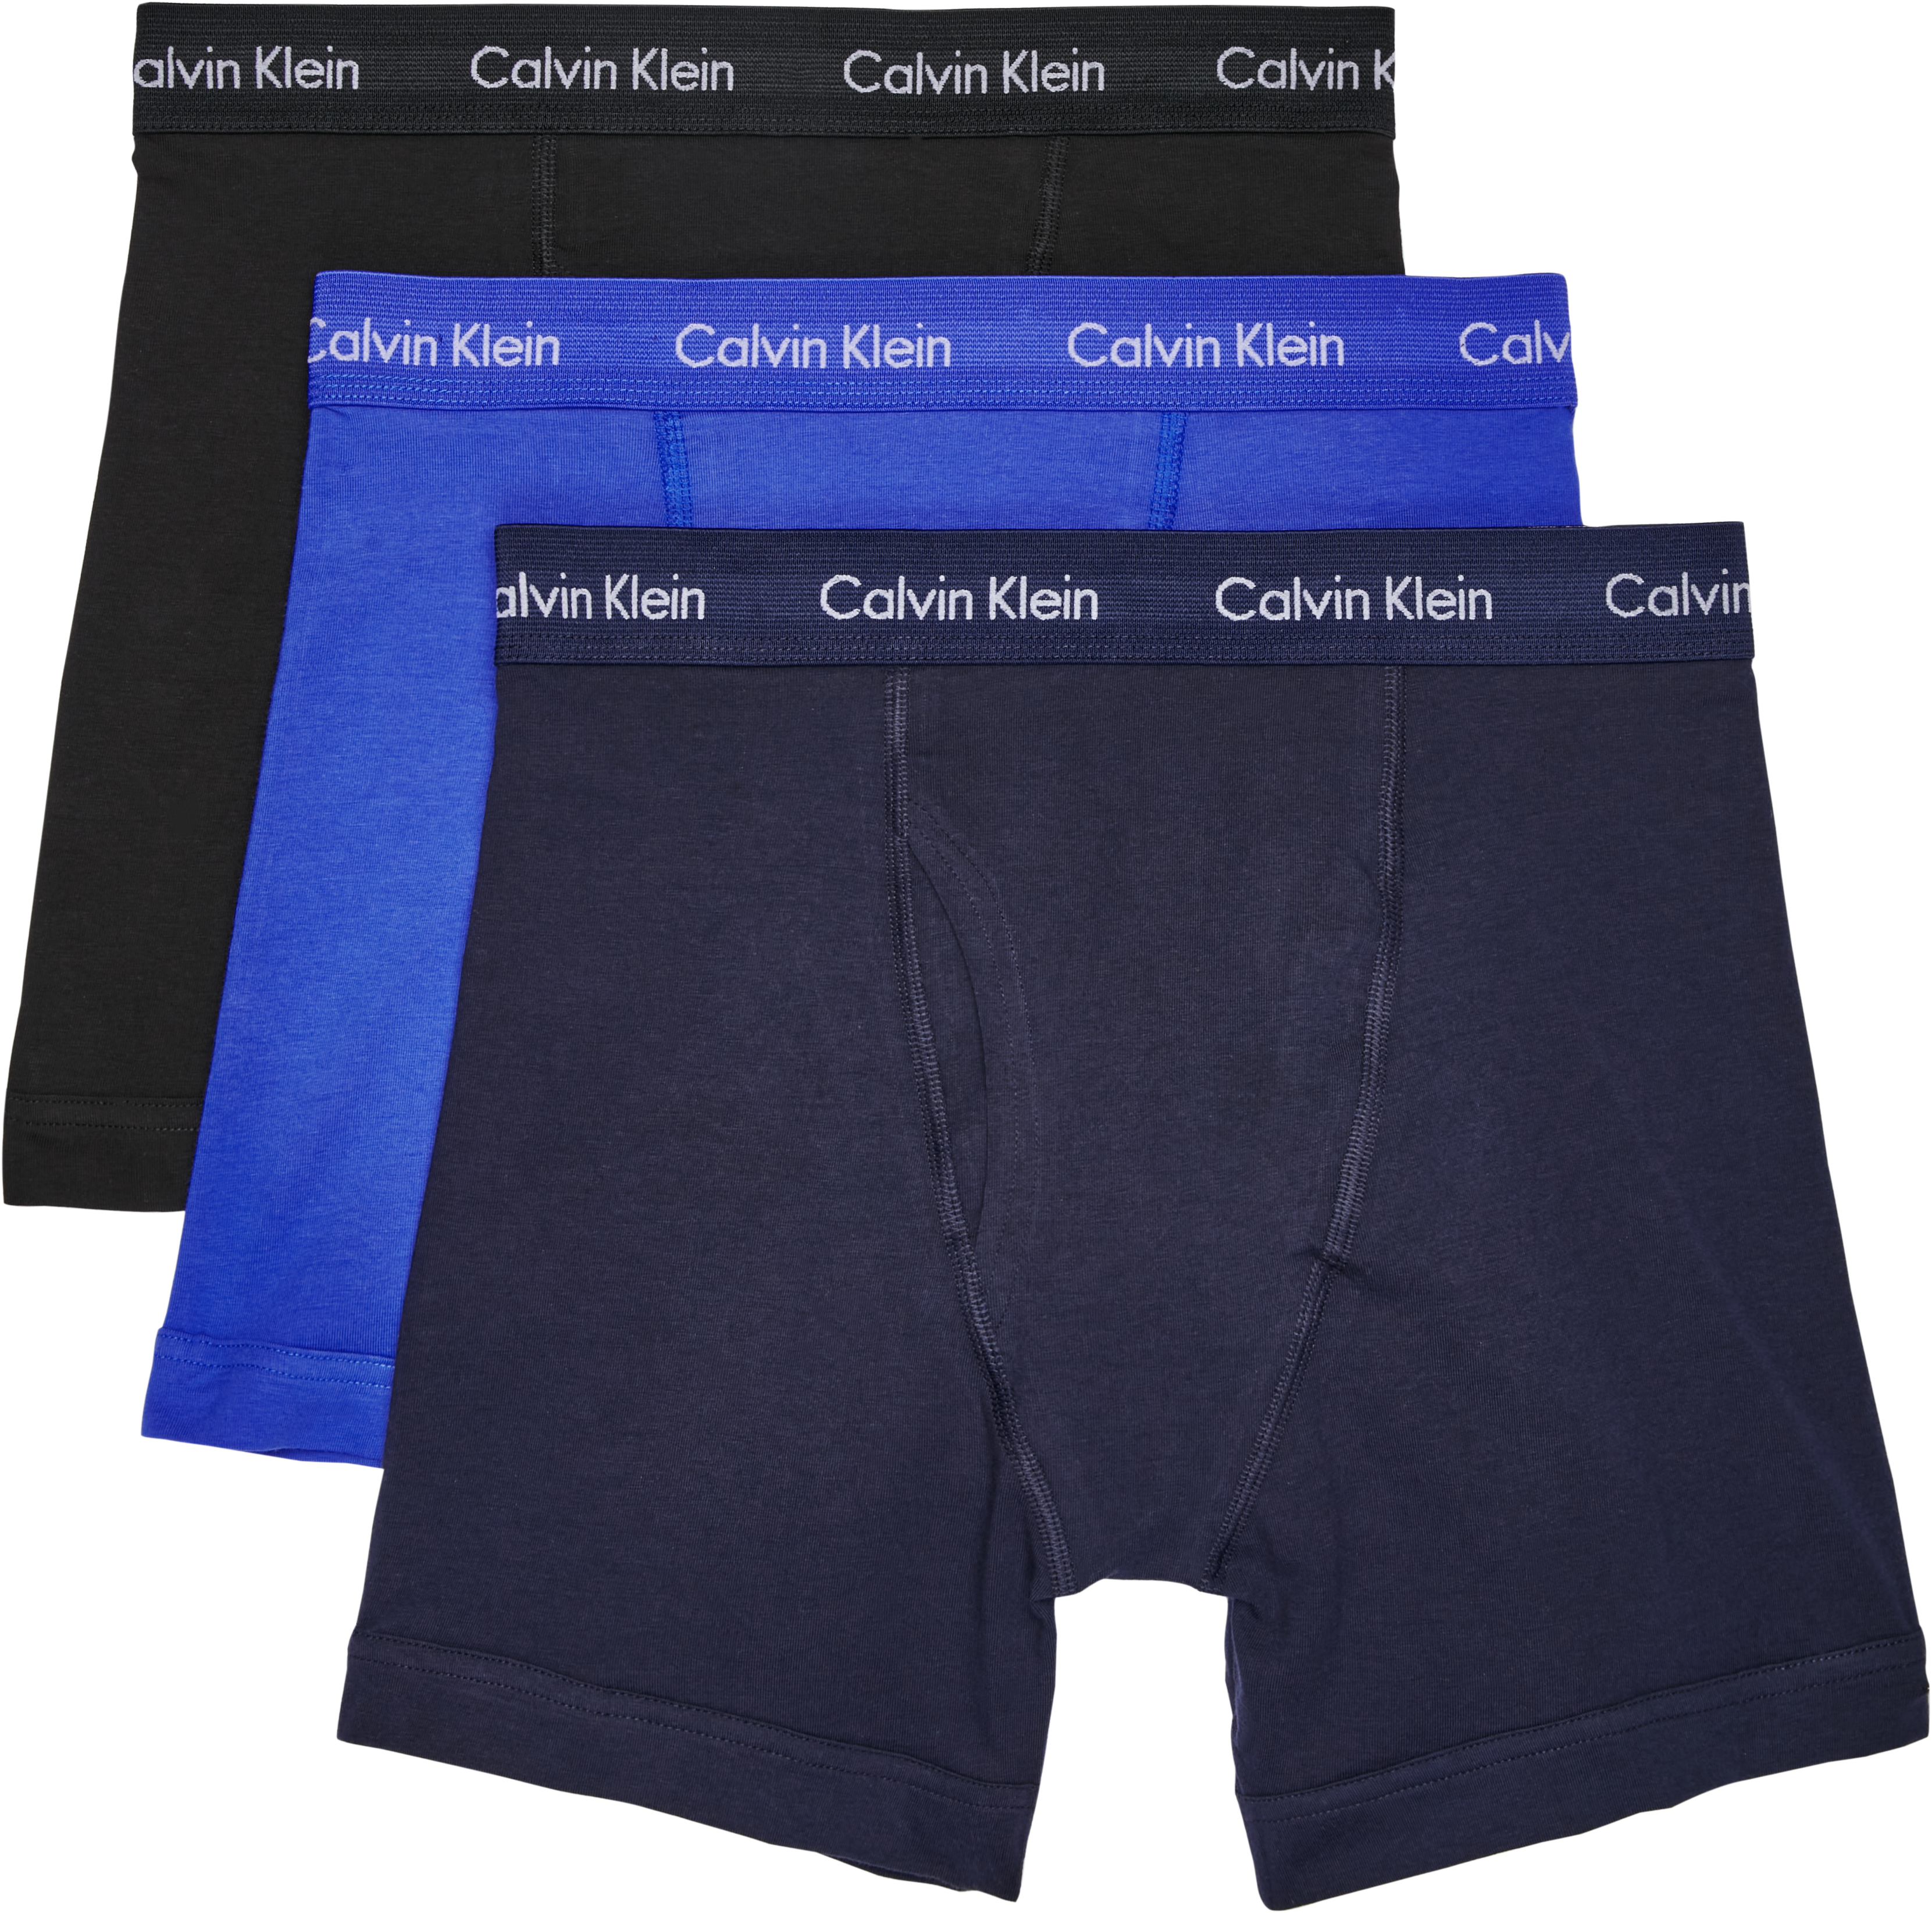 Calvin Klein Boxer Briefs, 3-Pack, Assorted - Men's Accessories | Men's  Wearhouse